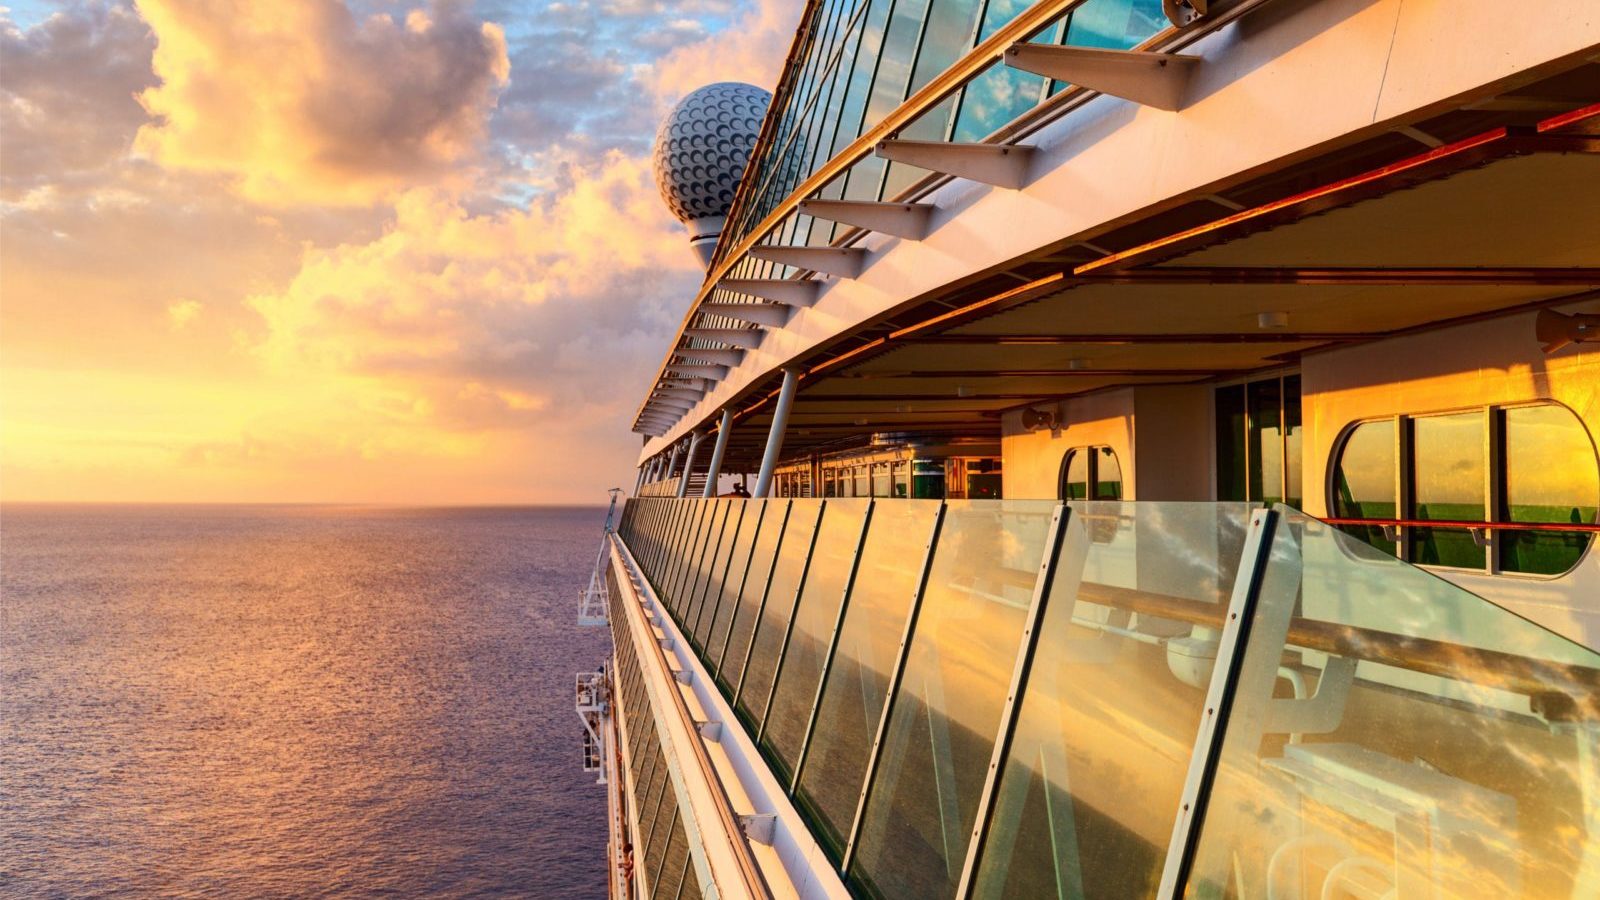 Cruise ship at sea (Photo: Shutterstock)